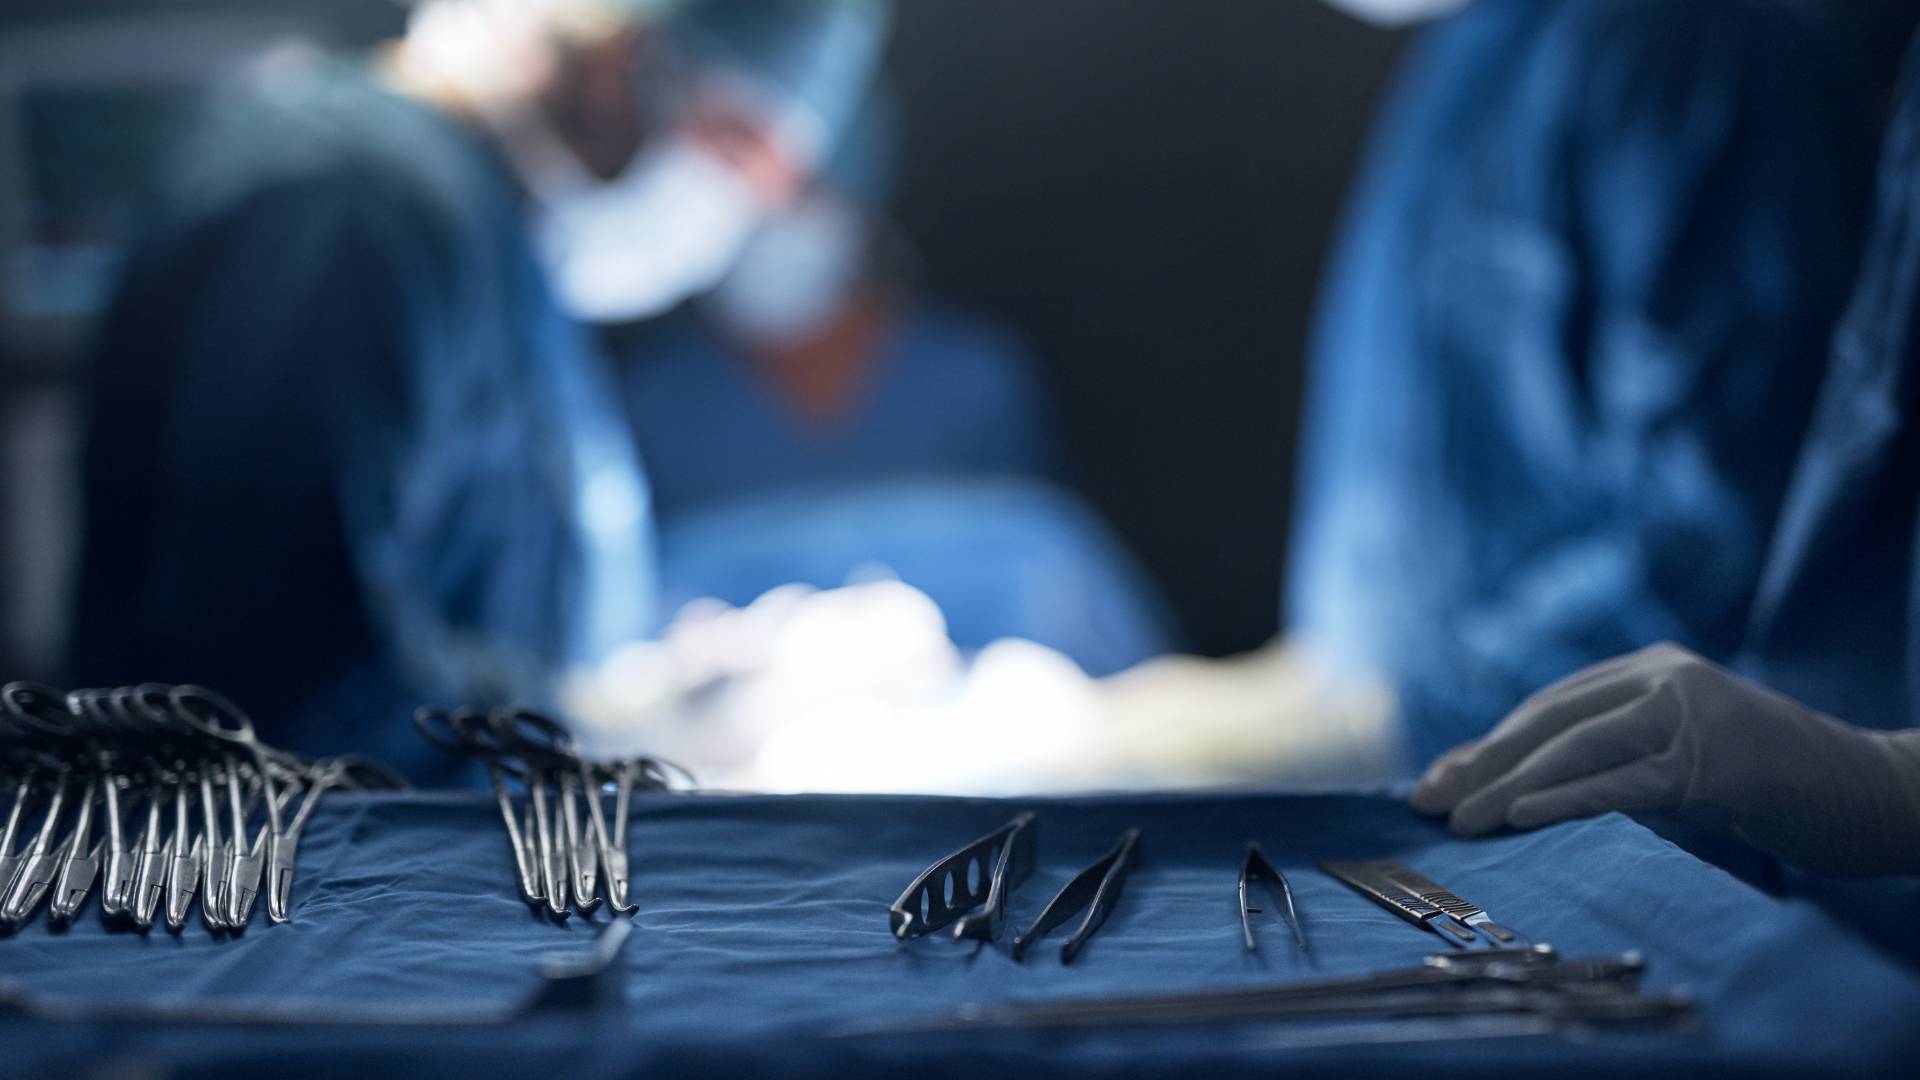 sterilized surgery instruments